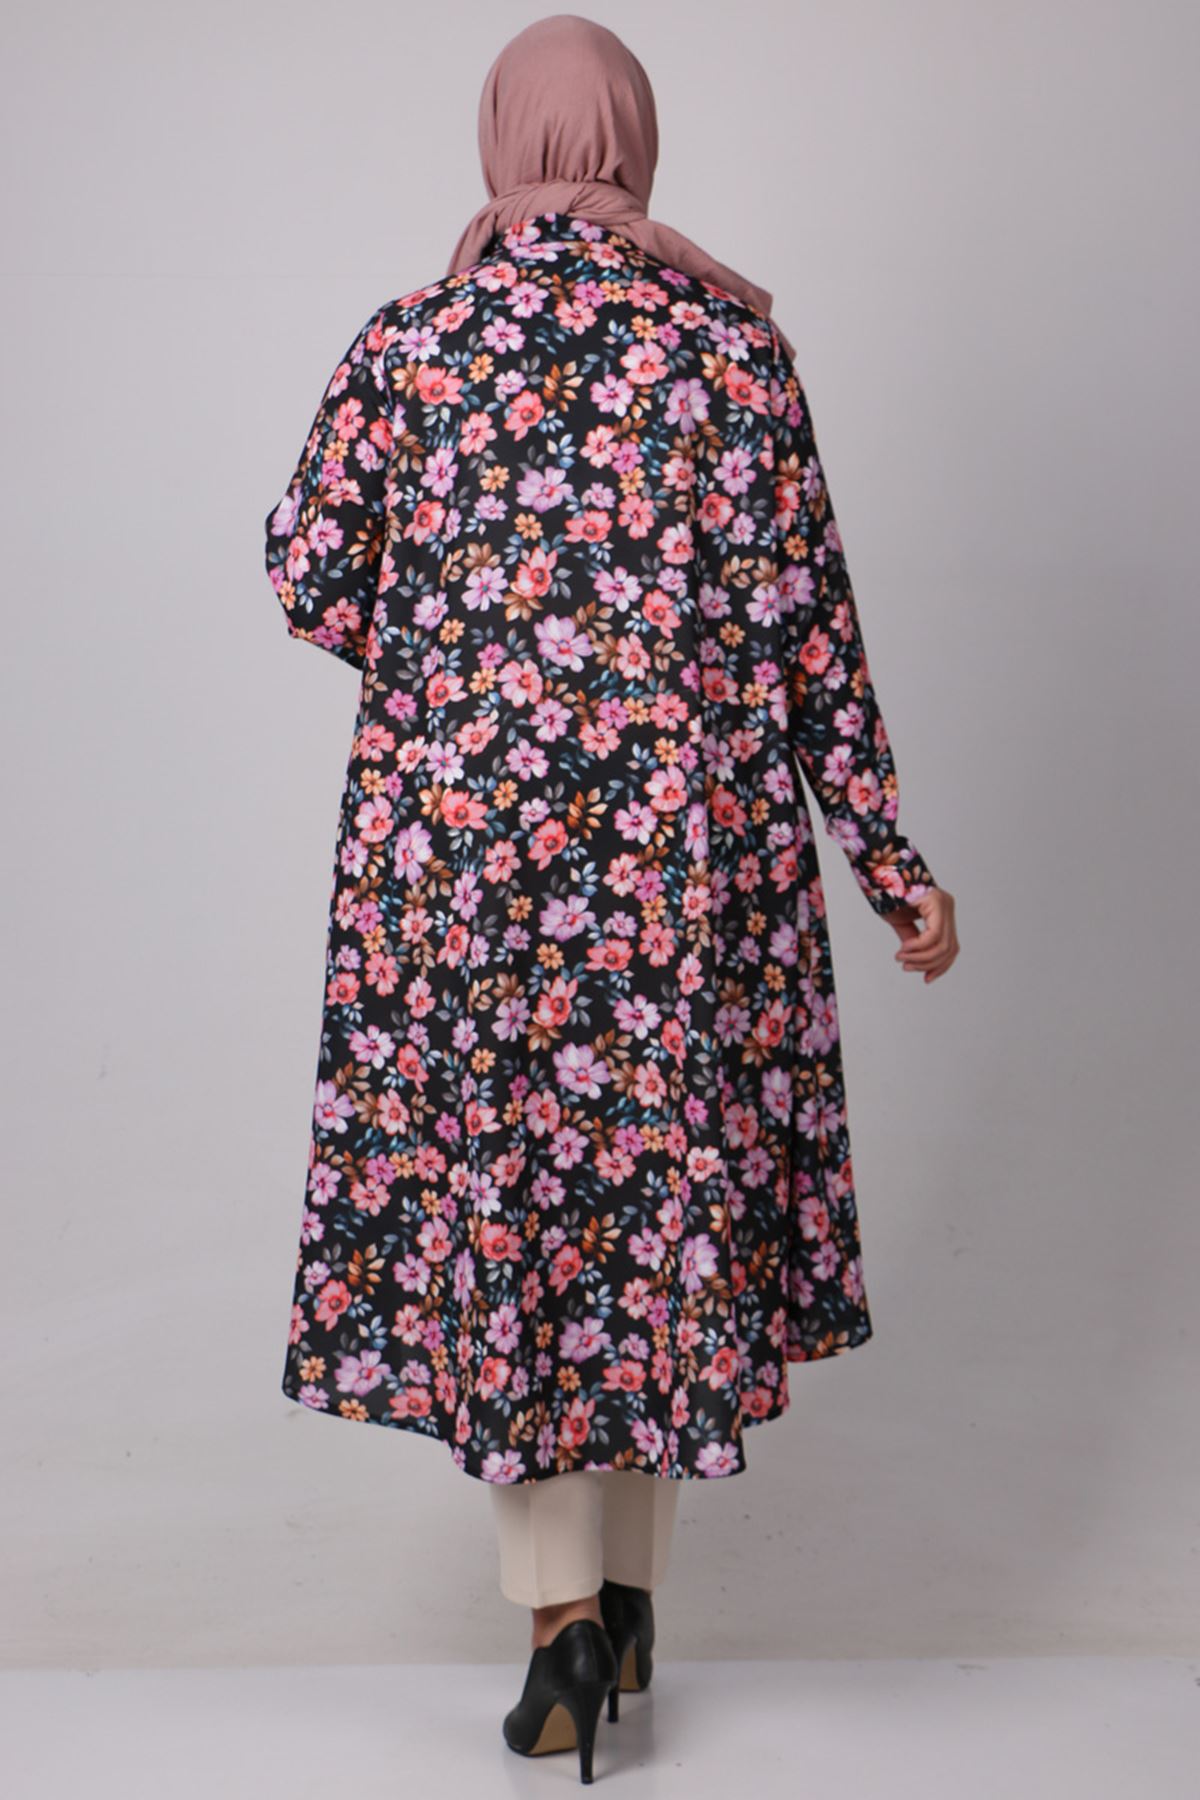 38047 Large Size Patterned Mevlana Jesica Shirt- Flower Pattern Black